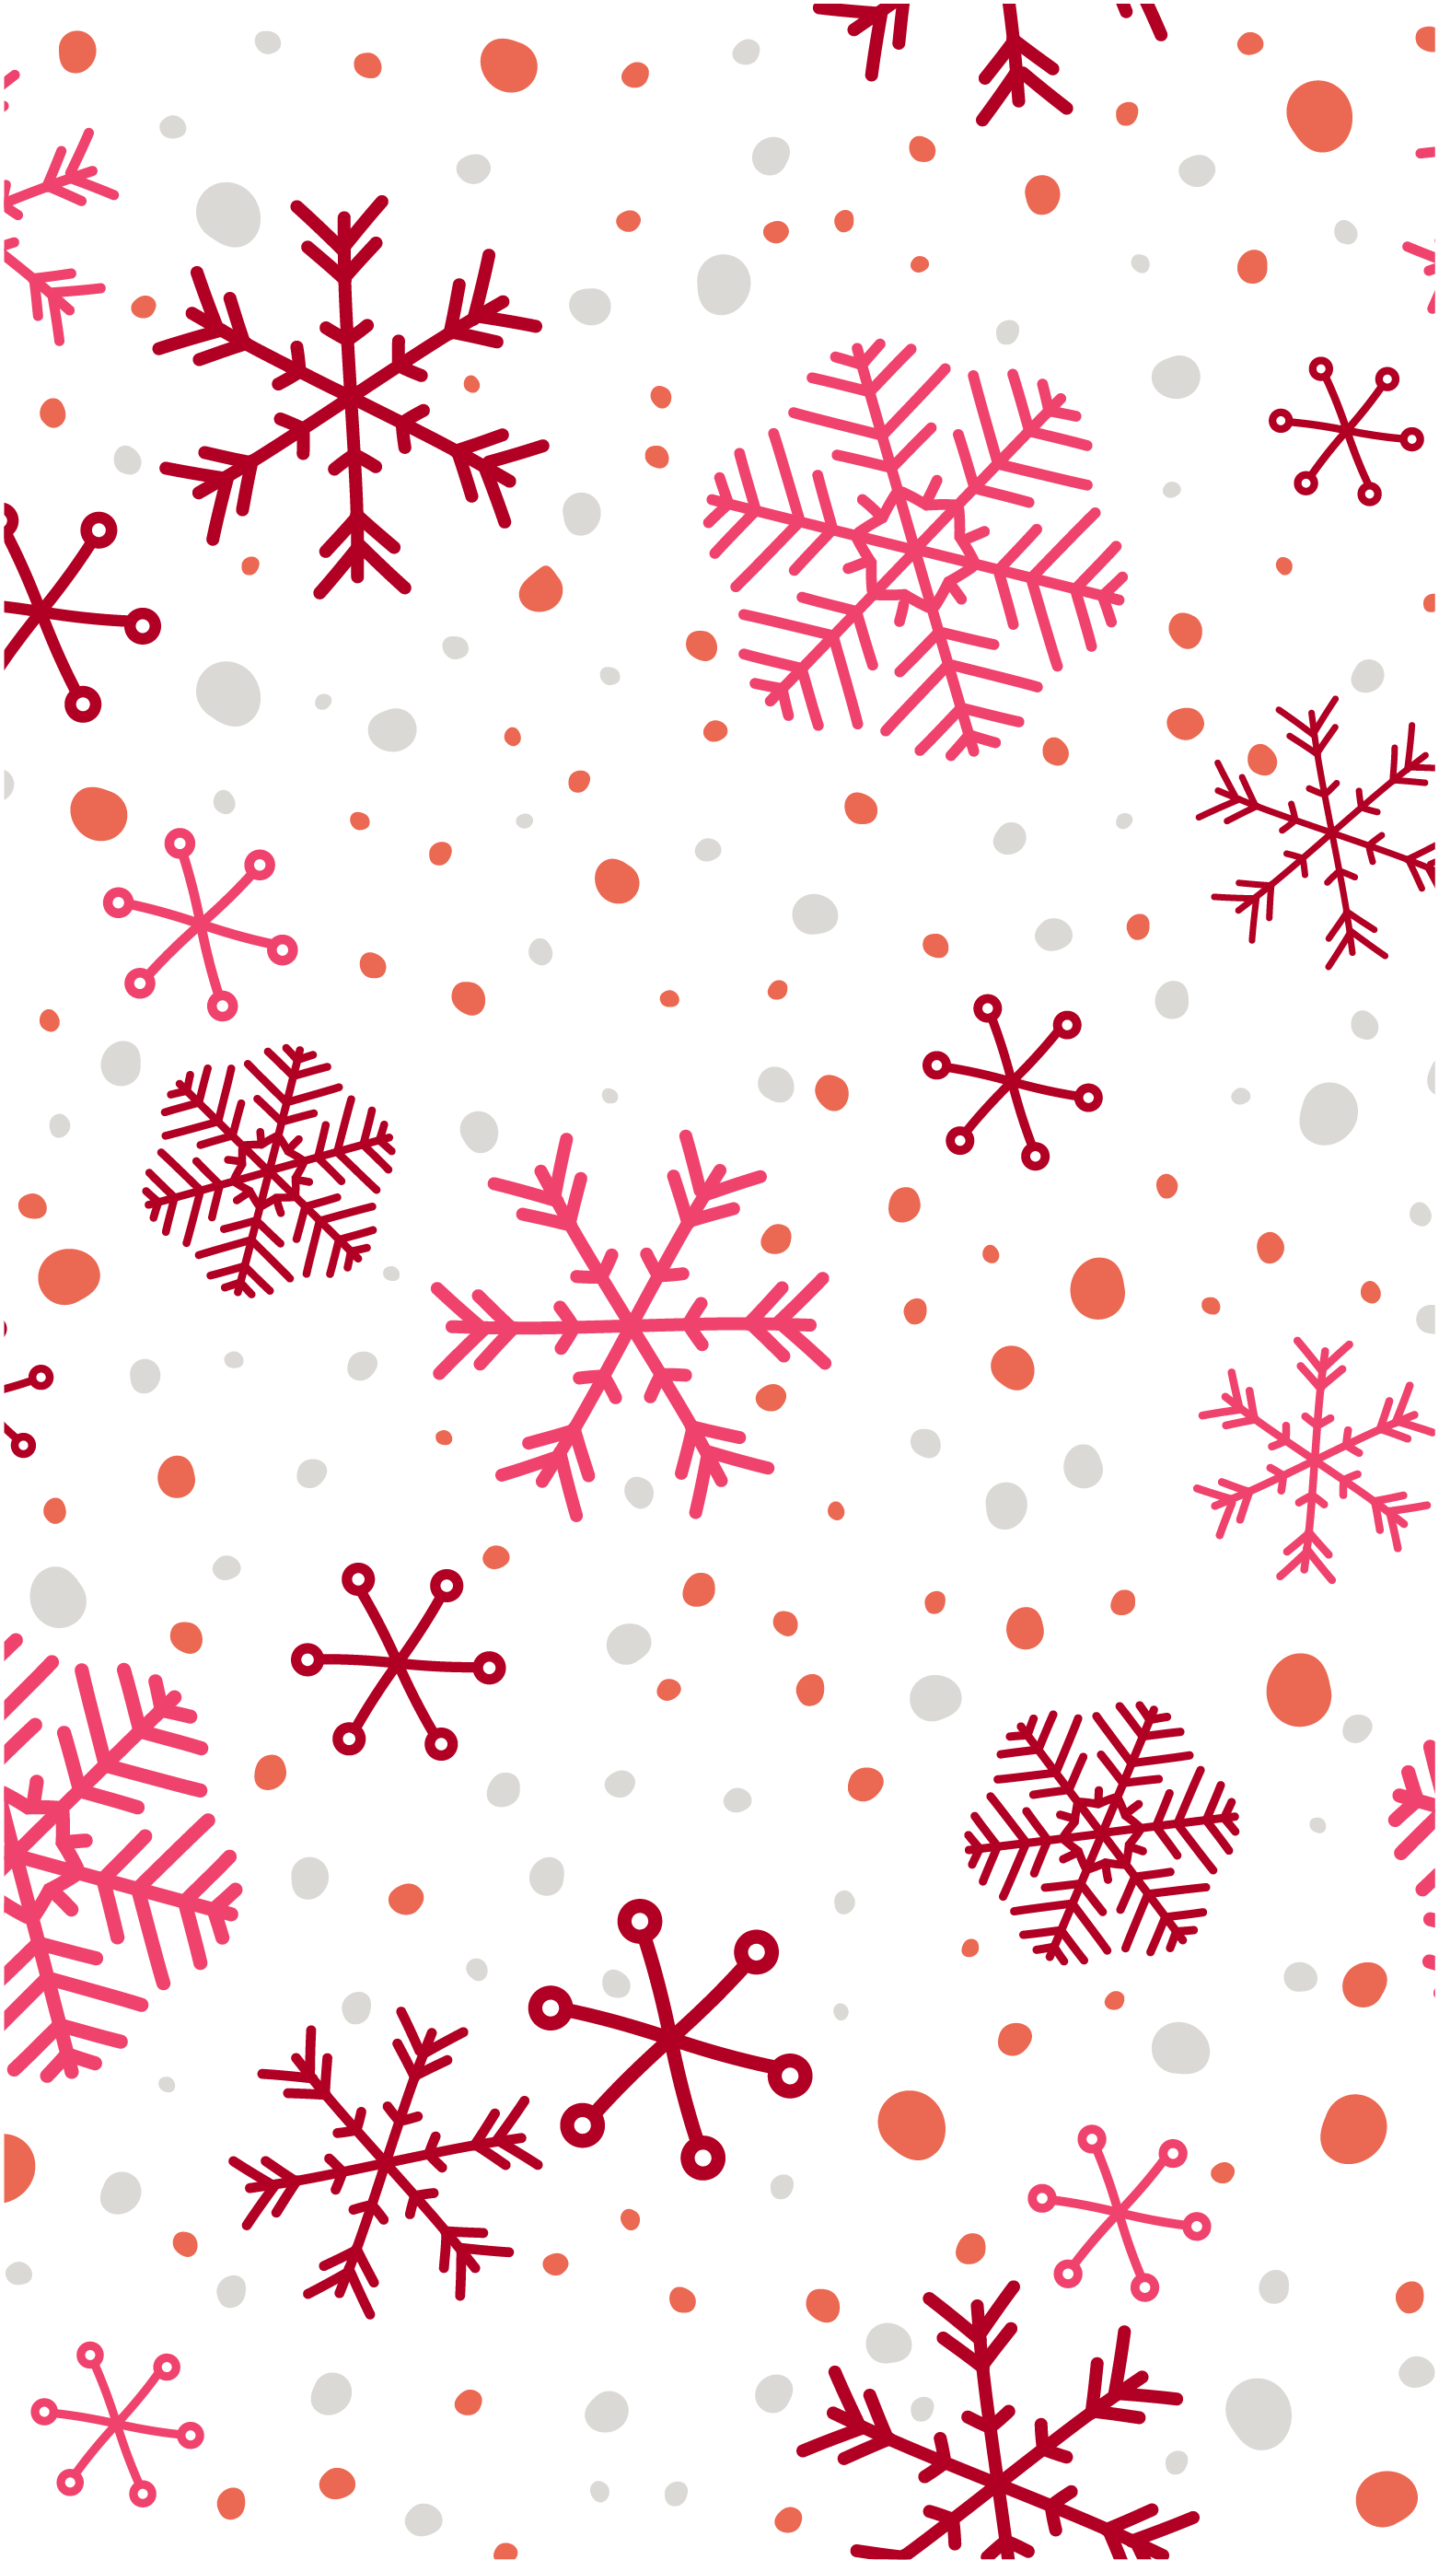 December 2019 Wallpaper  Snowflakes